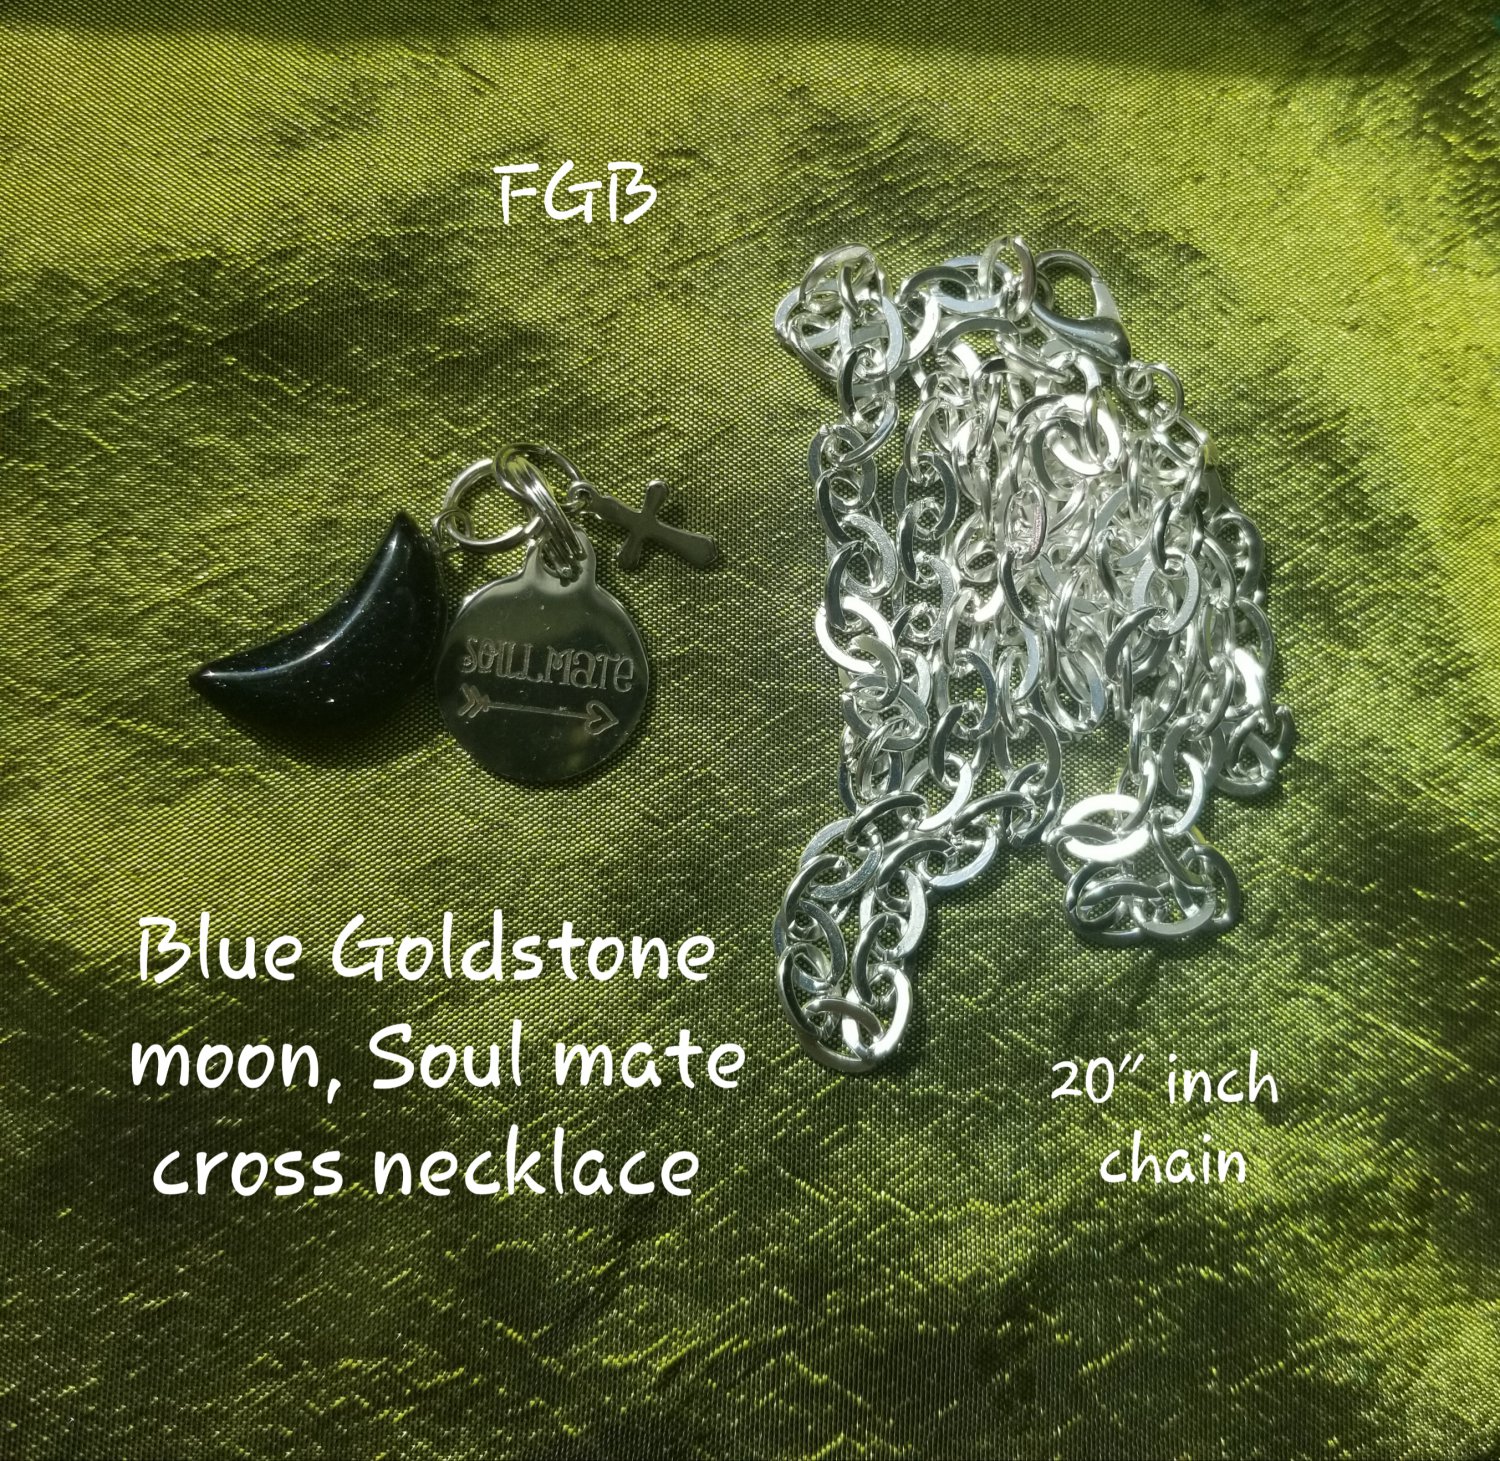 Blue goldstone moon cross necklace